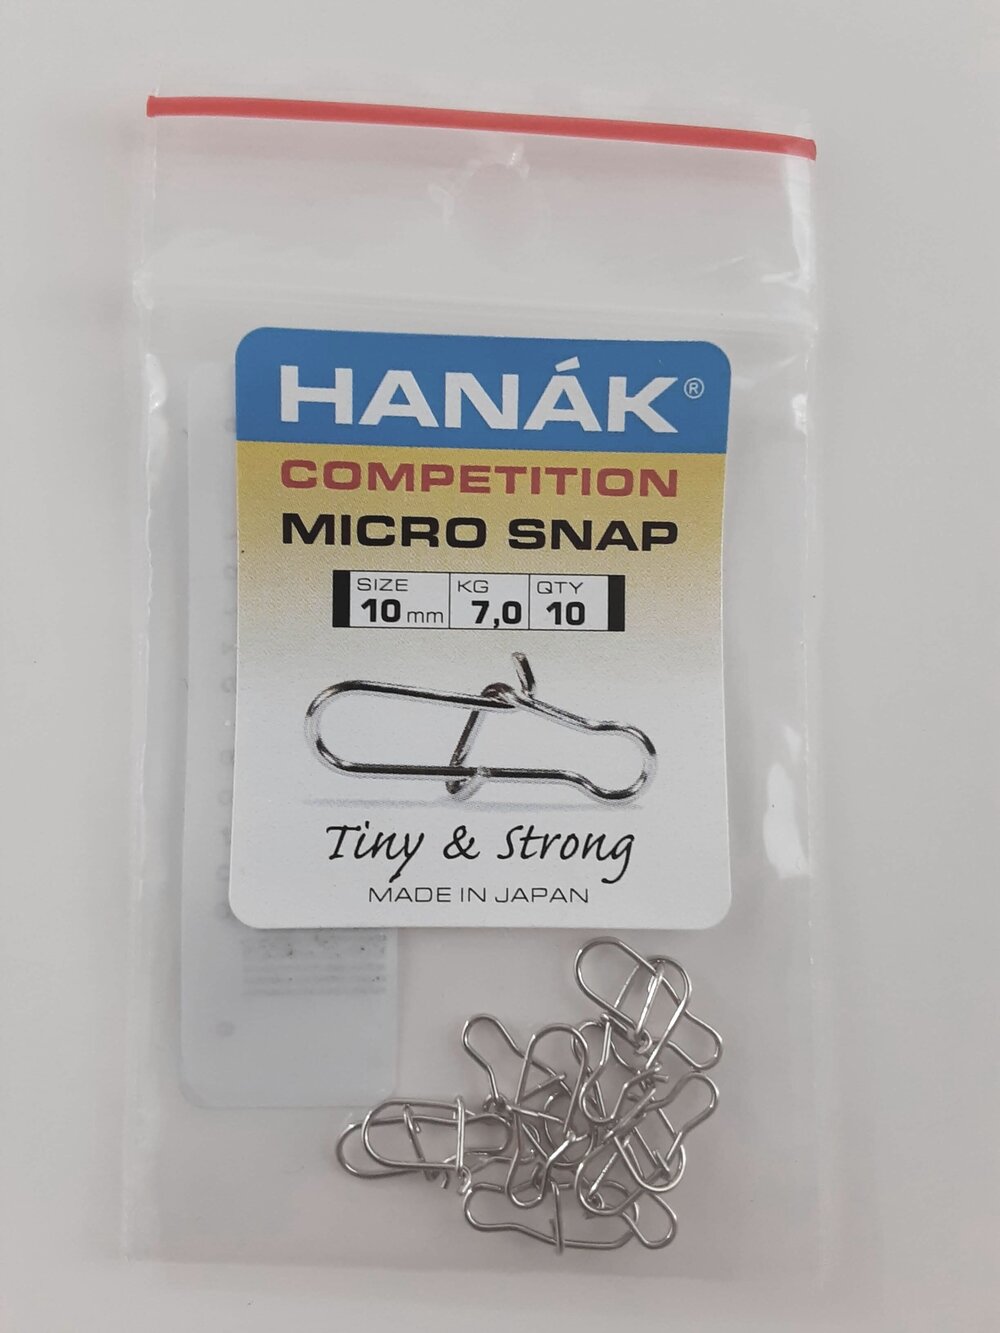 Hanak Micro Snaps | Spring Creek Fly Fishing